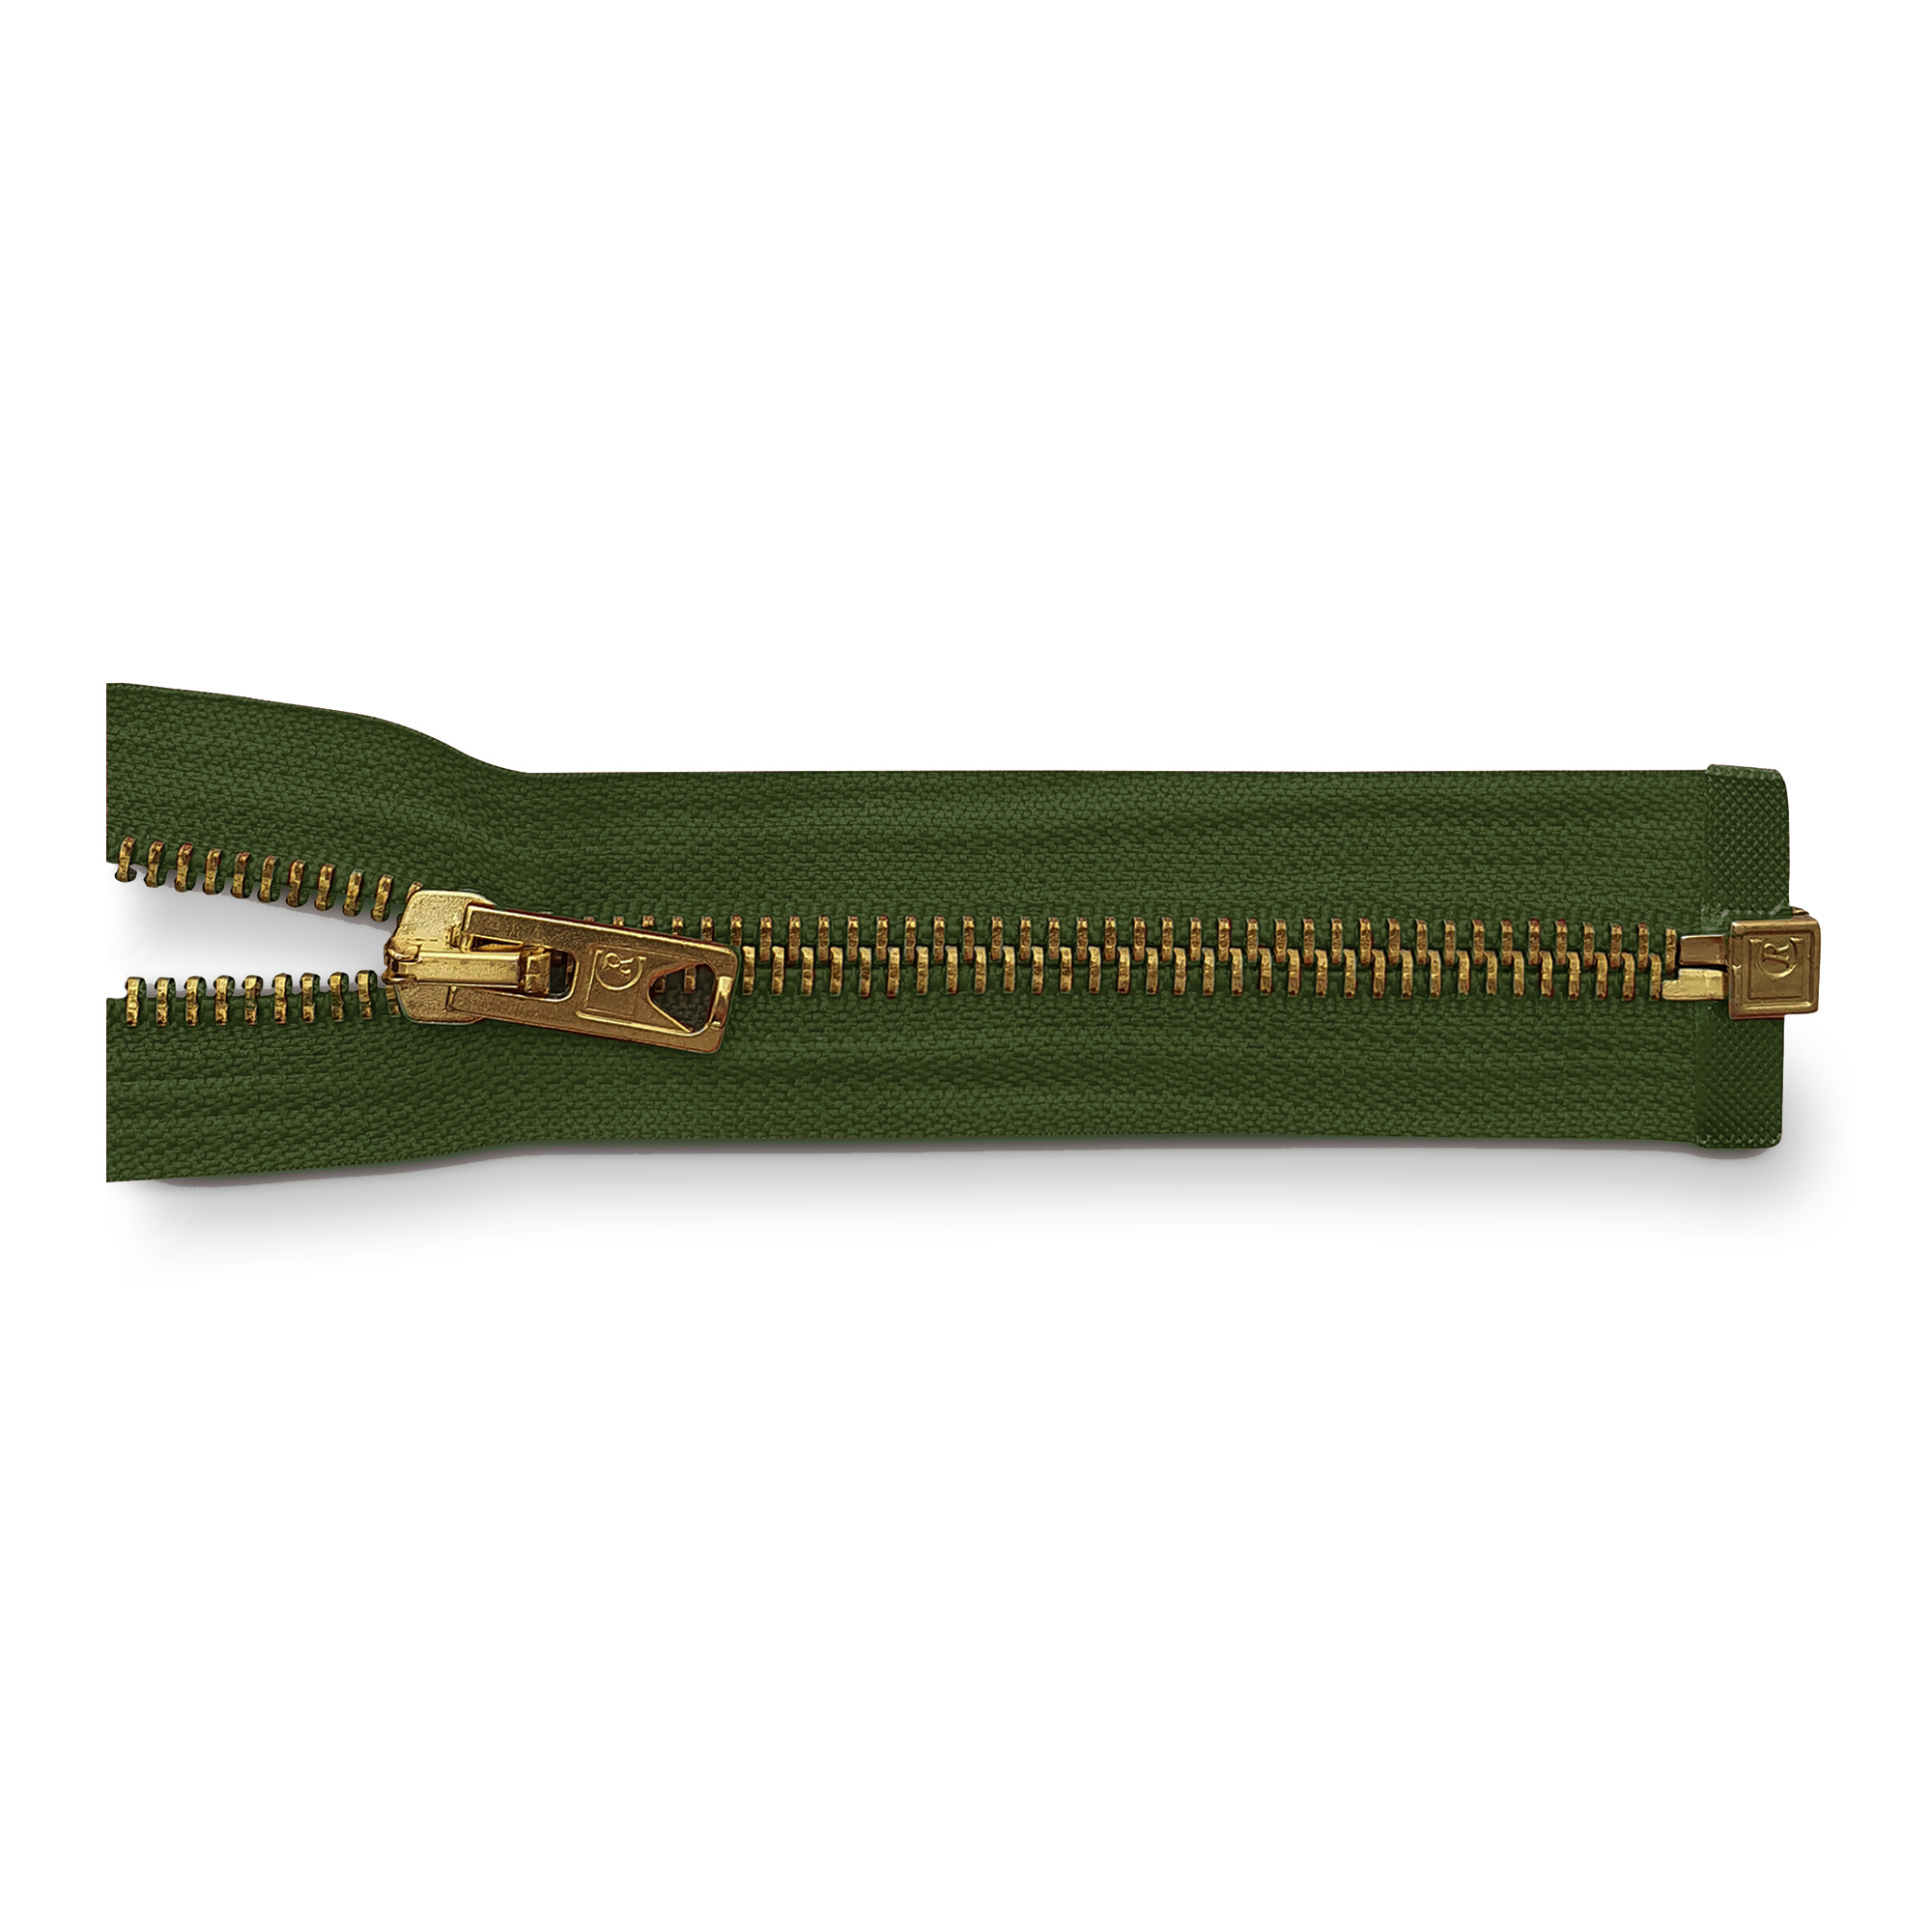 Reißverschluss 70cm, teilbar, Metall goldf. breit, dunkelgrün, hochwertiger Marken-Reißverschluss von Rubi/Barcelona